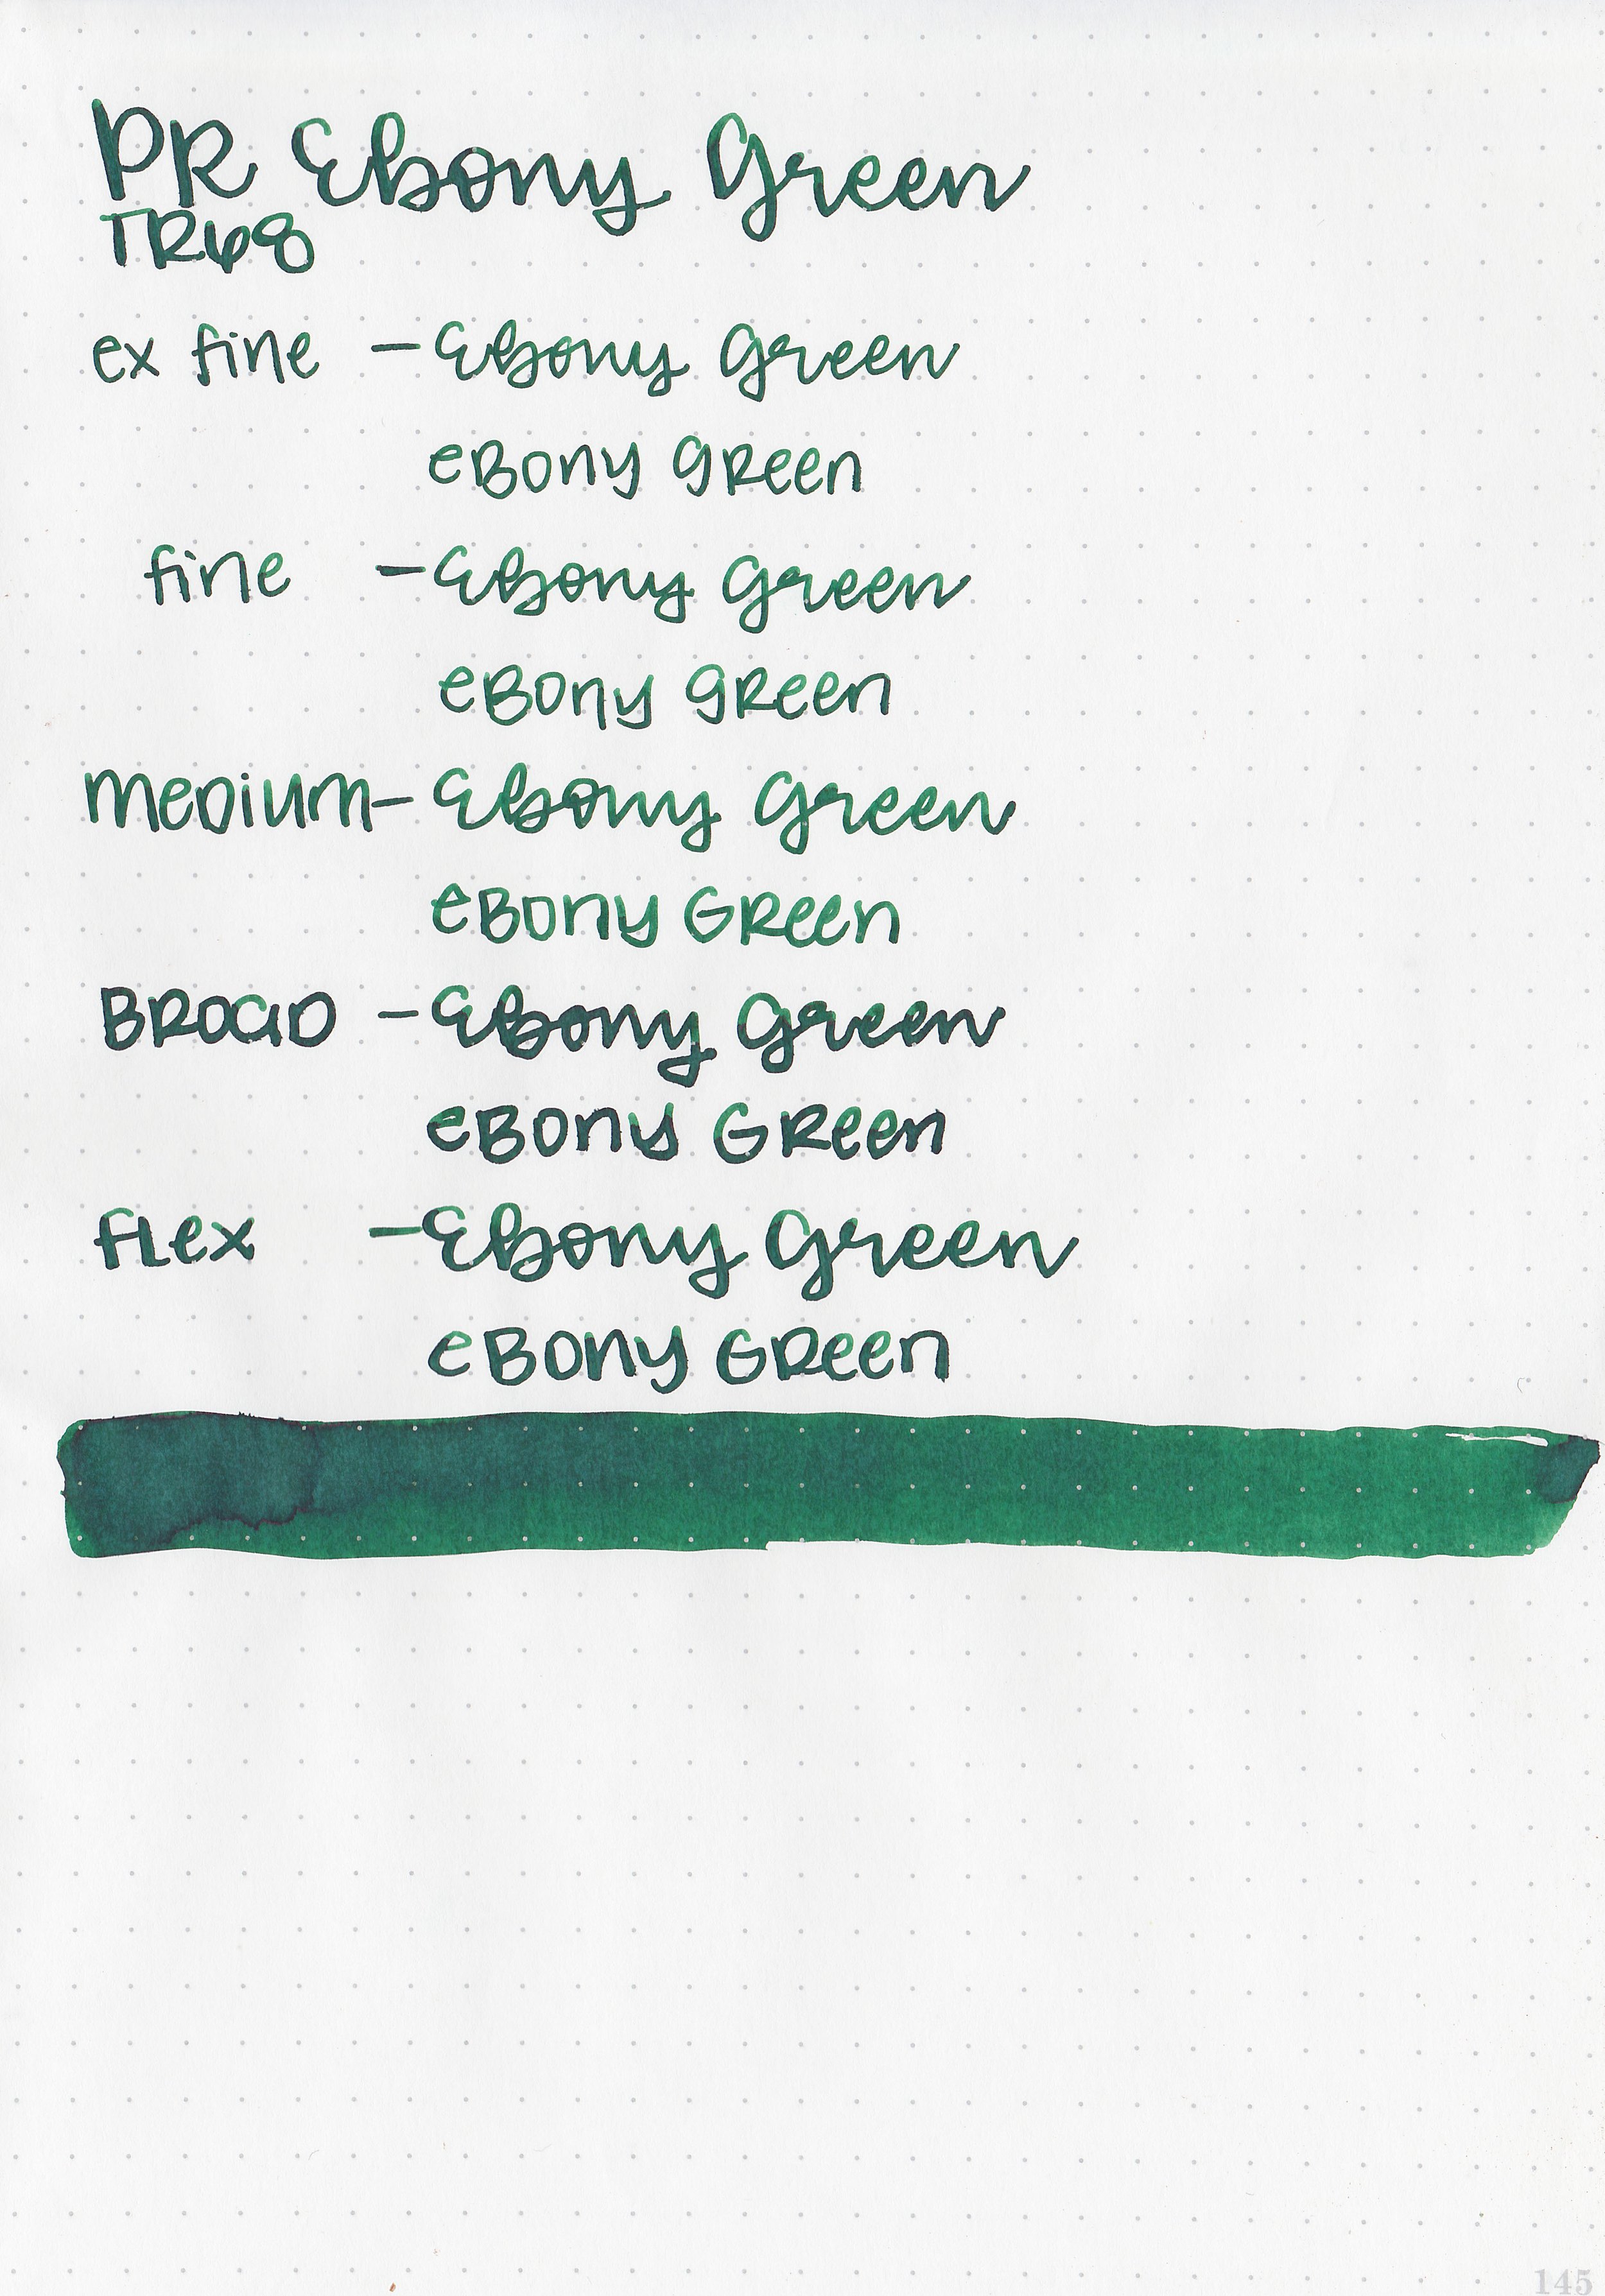 pr-ebony-green-7.jpg